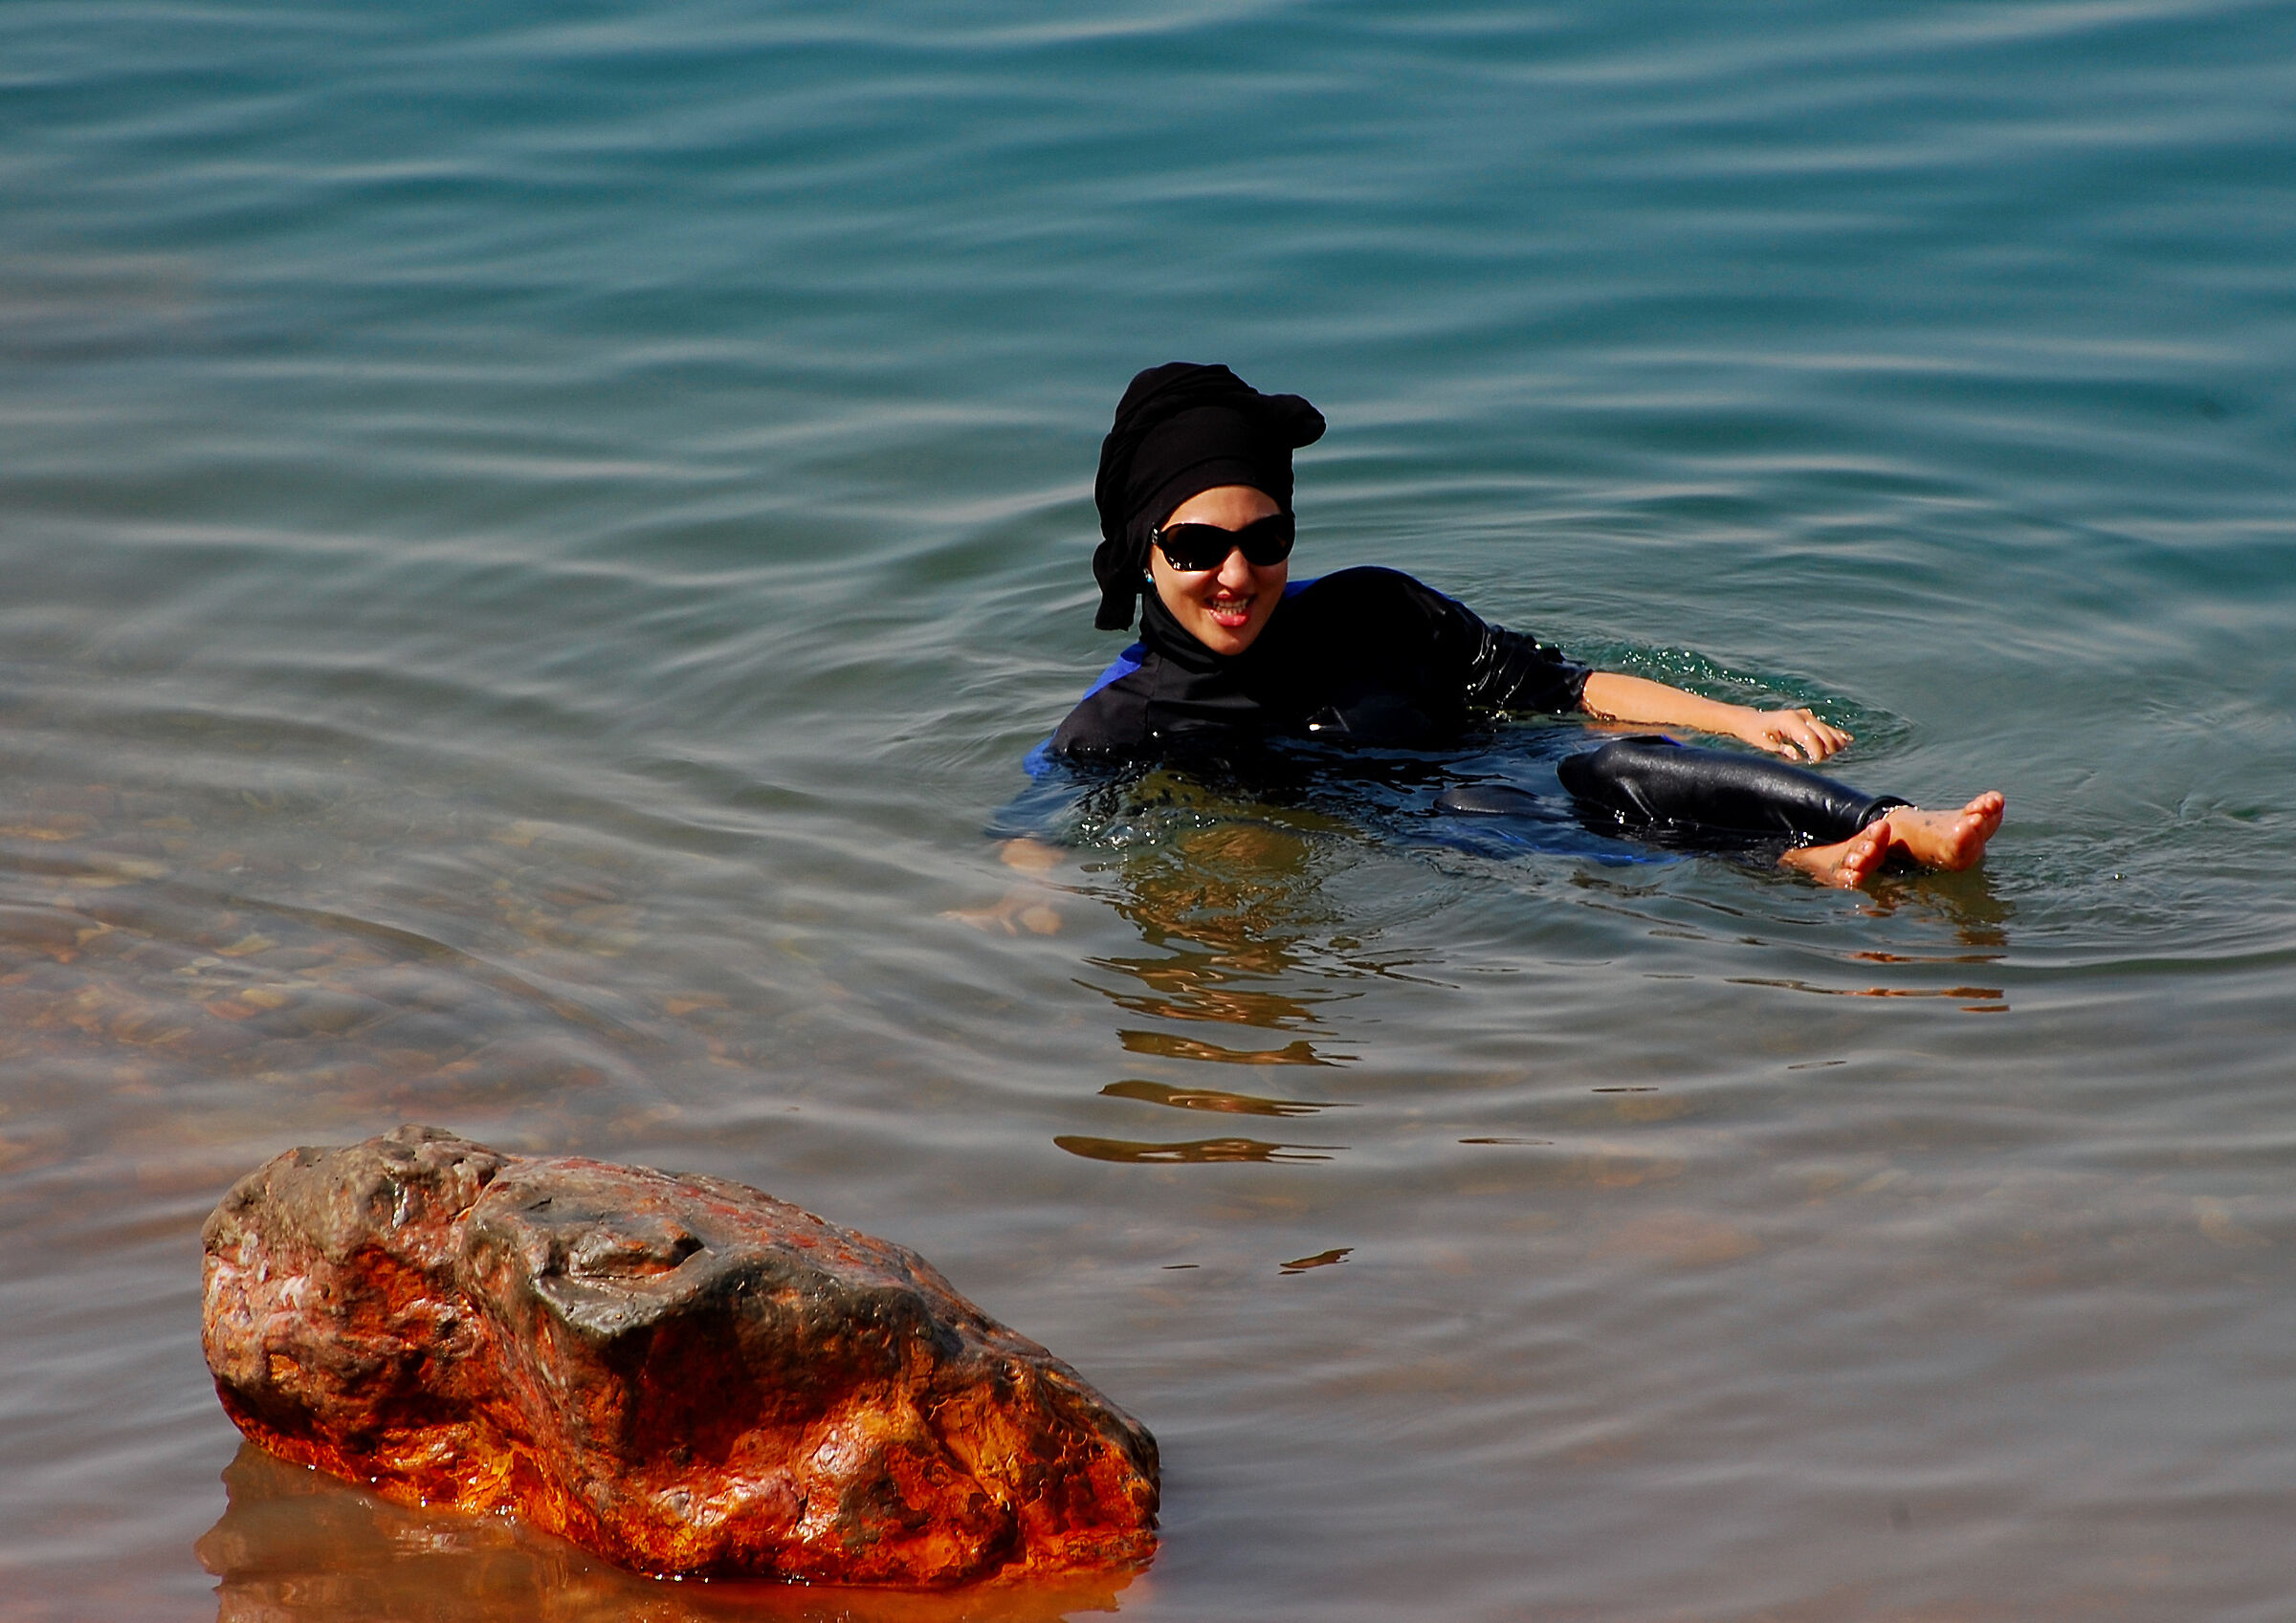 Dead Sea: somewhat daring costume?...